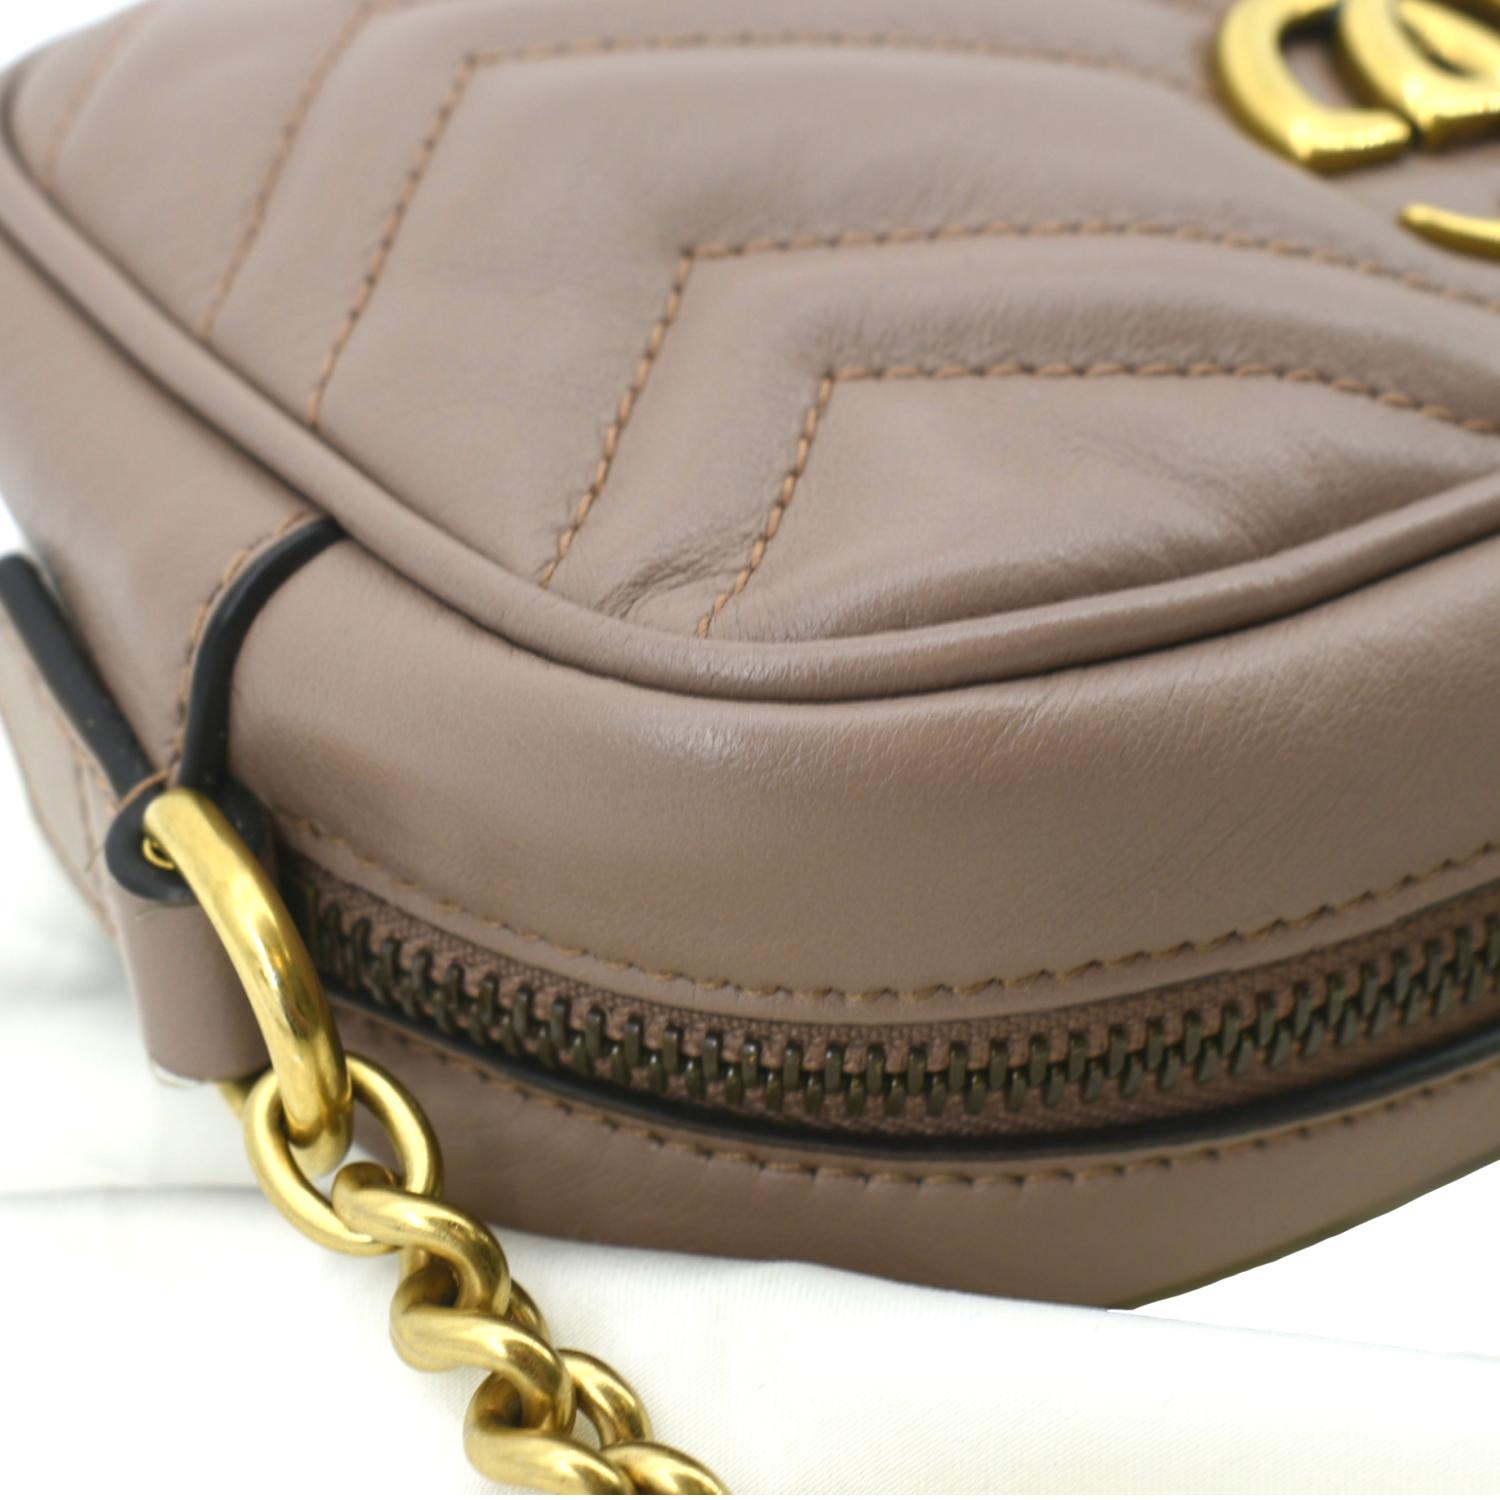 Gucci Beige Matelassé Leather Mini GG Marmont Camera Bag